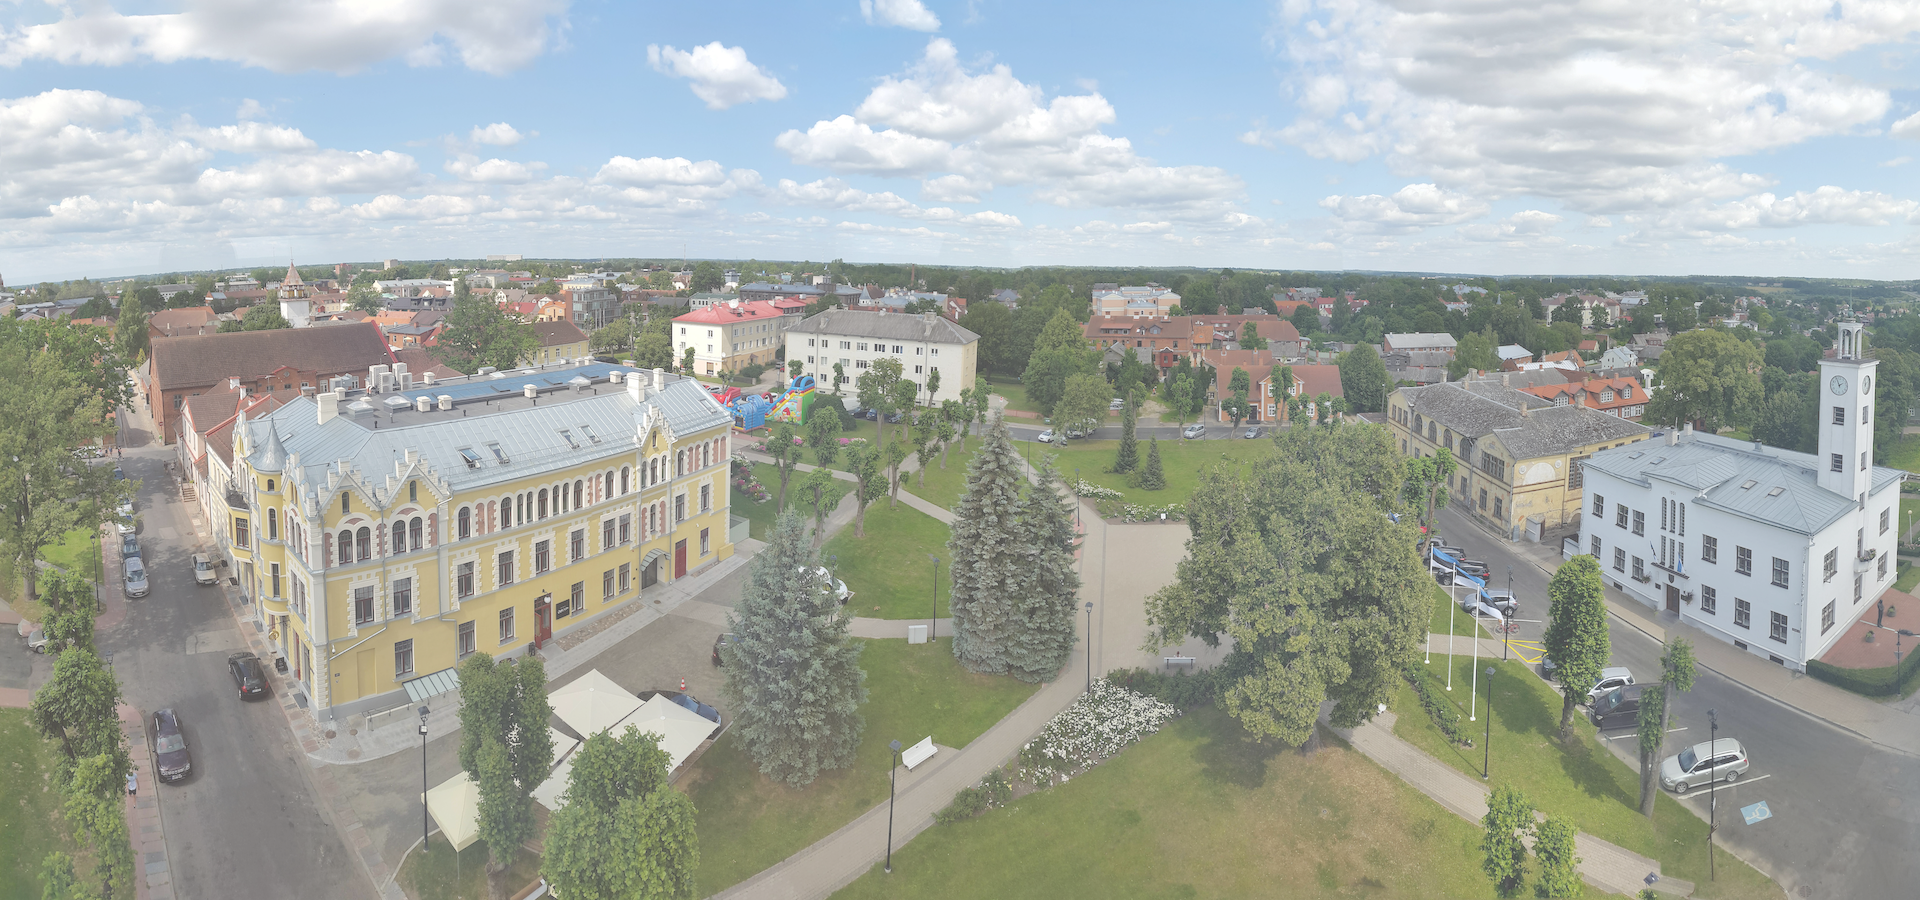 <b>Viljandi, Estonia</b>